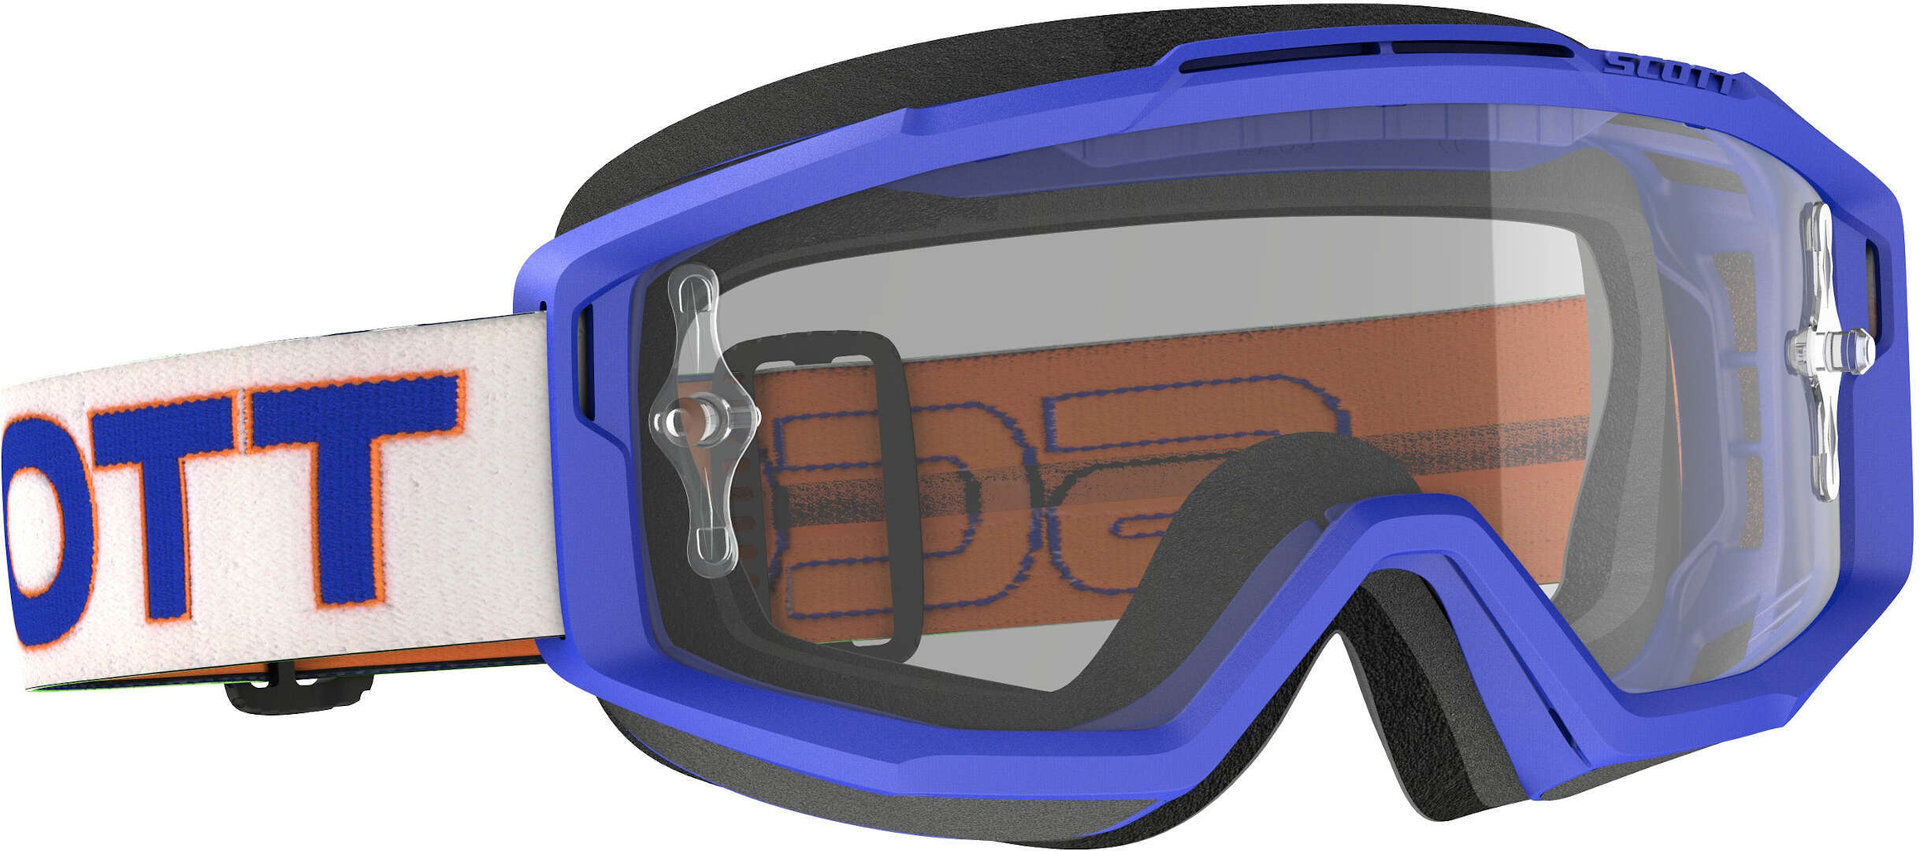 Scott Split OTG Gafas de Motocross azul/blanco - transparente (un tamaño)